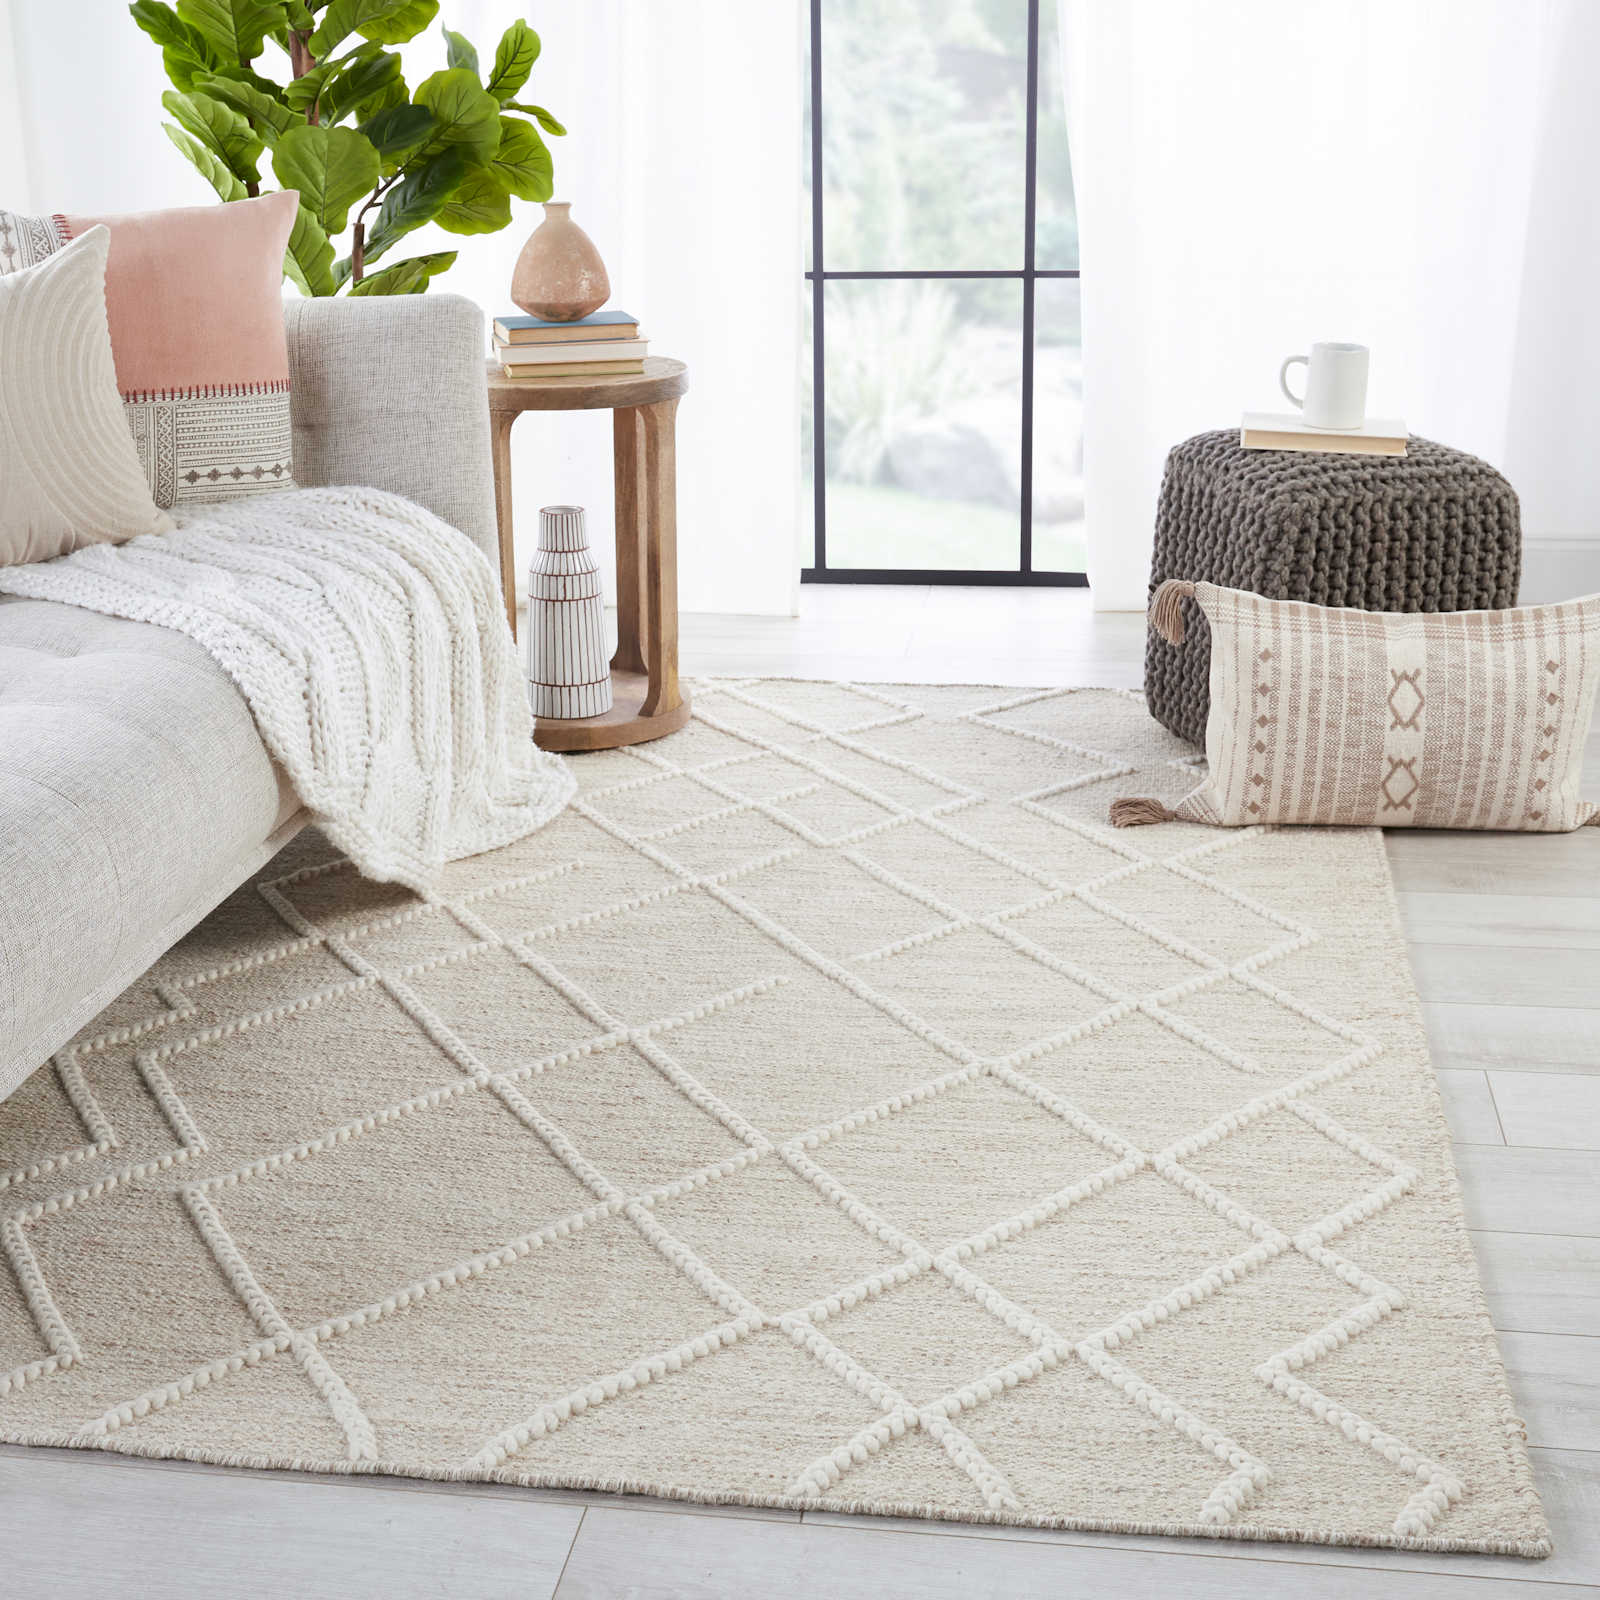 neutral textured geometric area rug